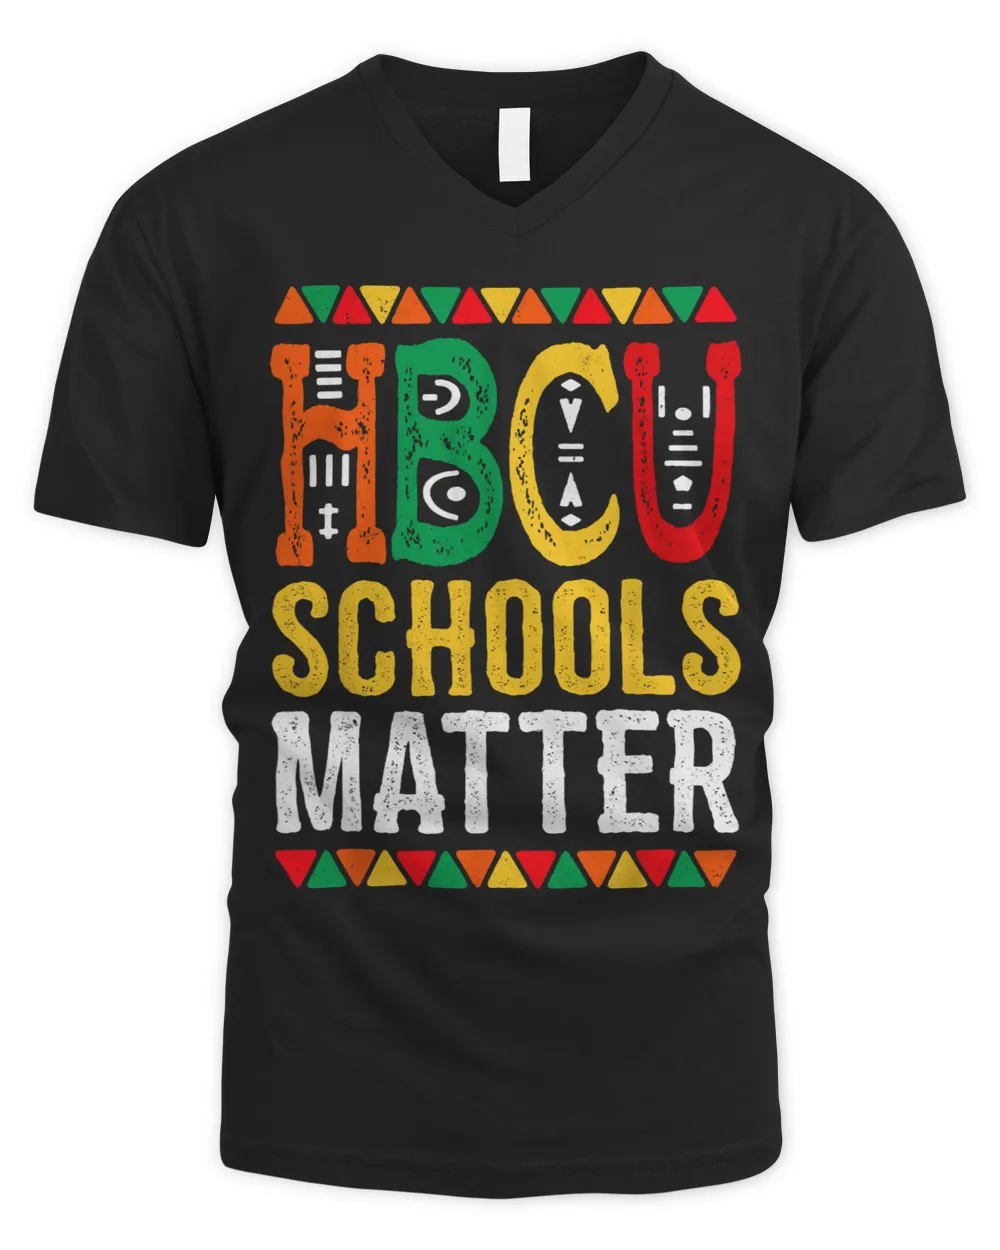 Proud HBCU Schools Matter Historical Black College Alumni